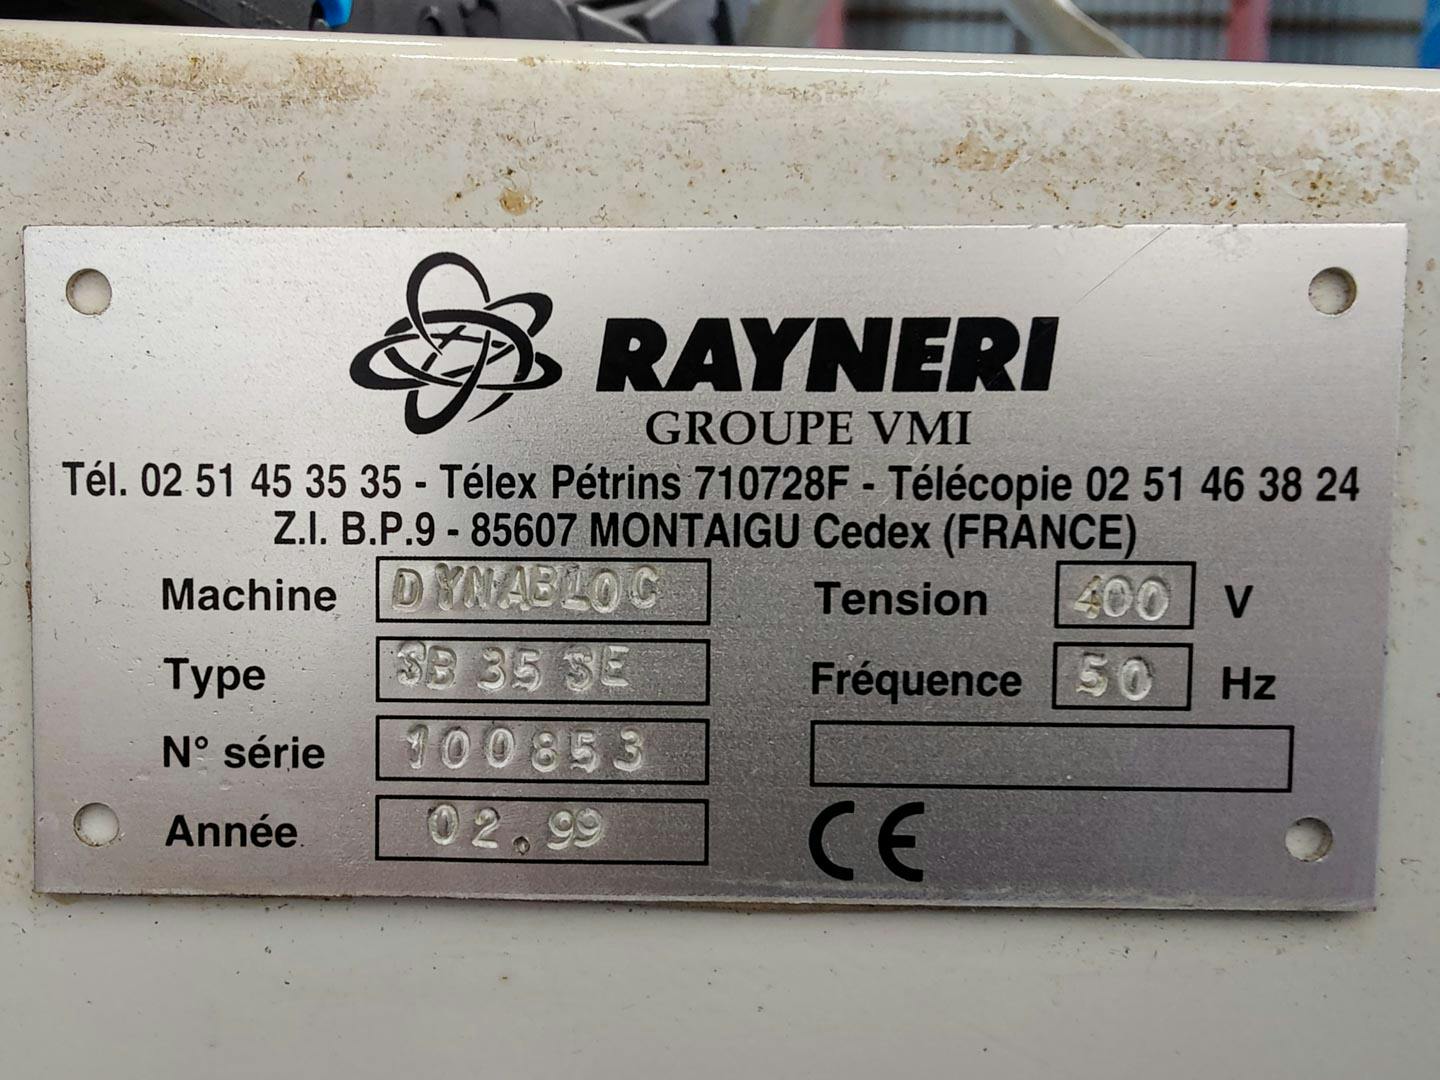 Rayneri France Dynabloc SB 35 SE - Rührwerk - image 10